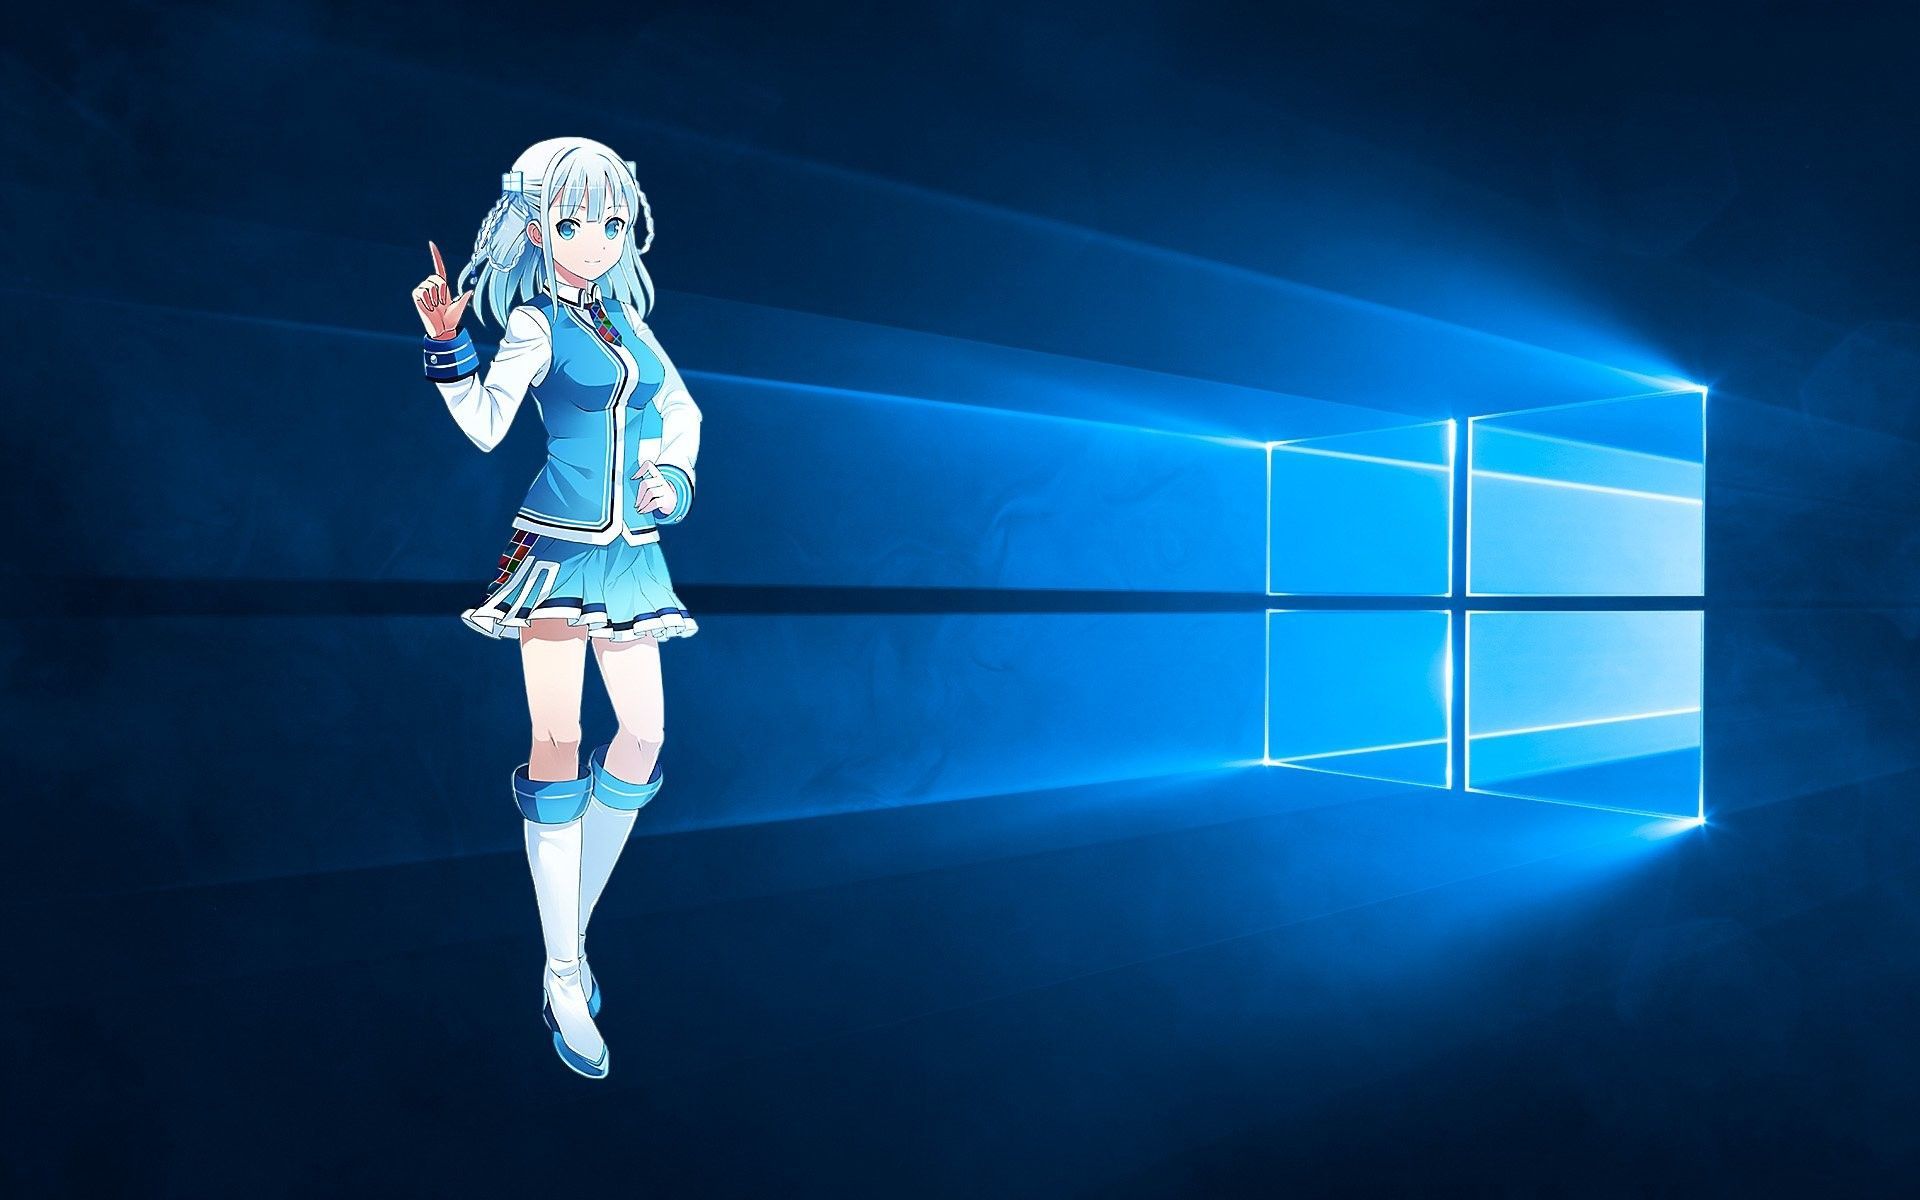 Wallpaper Anime HD Windows 10 HD Windows 10 Anime Wallpaper 82 Image Windows 10 Anime St in 2020p anime wallpaper, Anime wallpaper download, Wallpaper windows 10